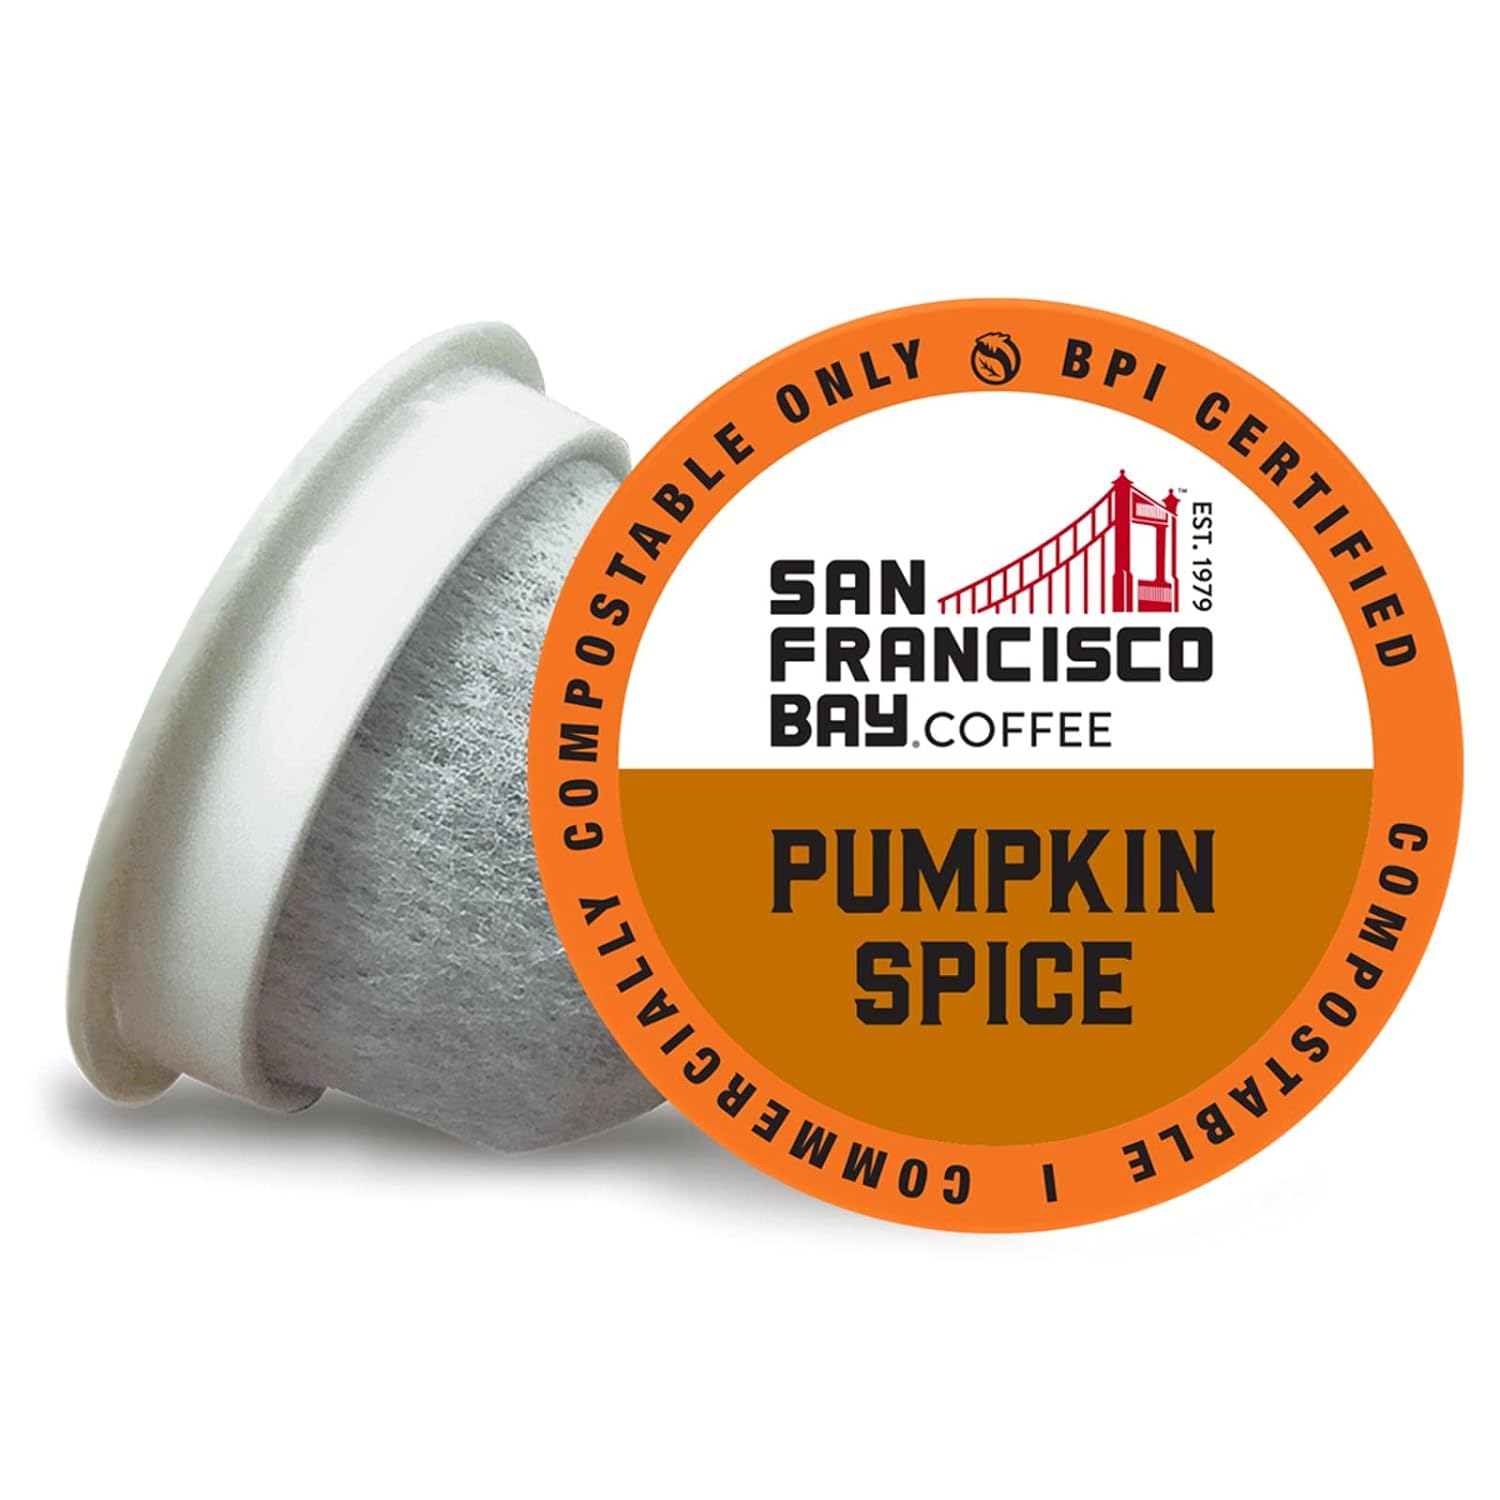 San Francisco Bay Compostable Coffee Pods - Pumpkin Spice (80 Ct) K Cup Compatible including Keurig 2.0, Flavored, Medium Roast